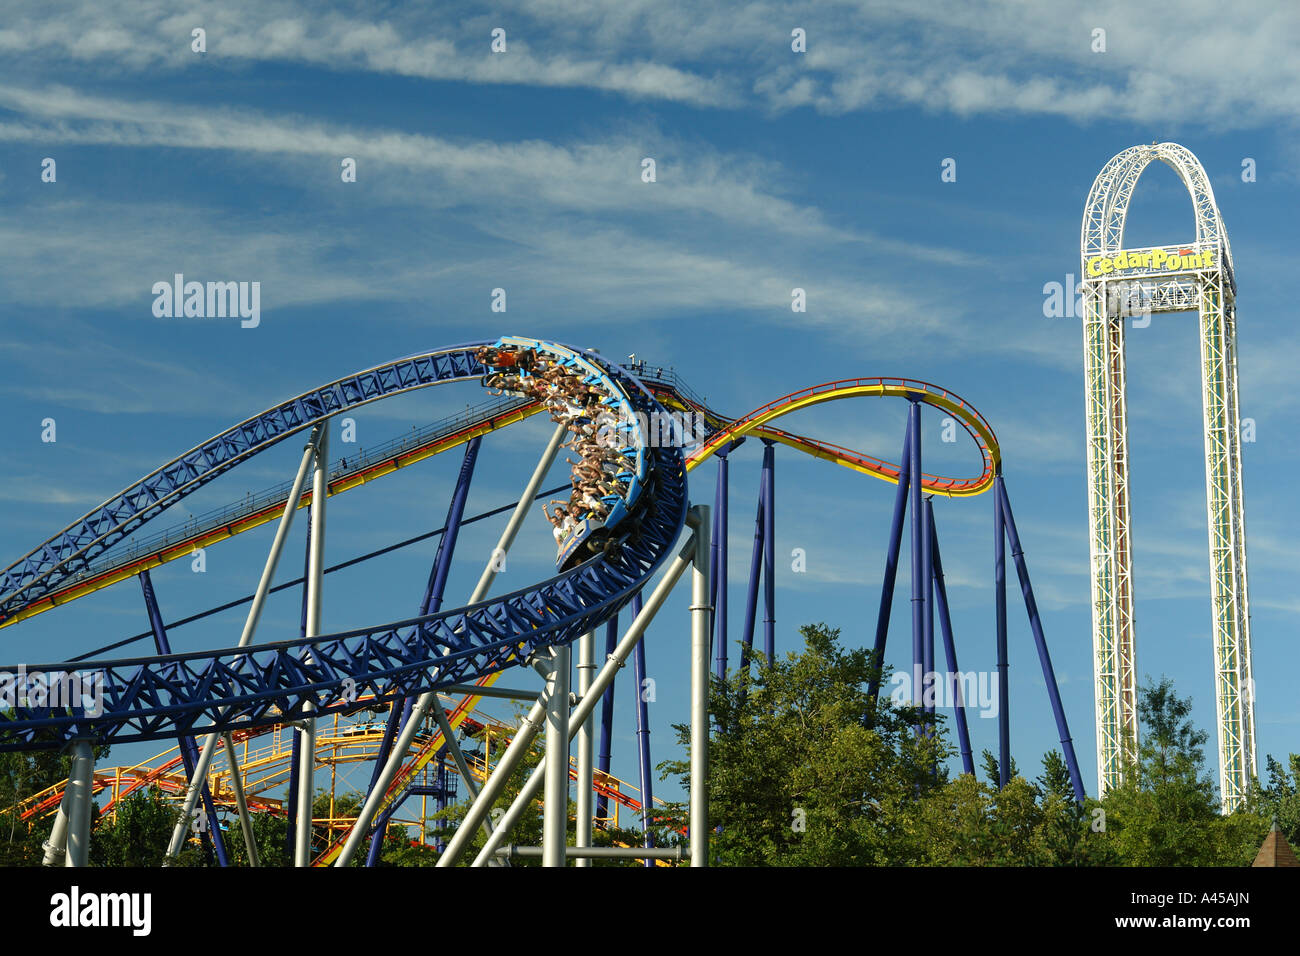 AJD57778, Sandusky, OH, Ohio, Cedar Point, Amusement Park, roller coaster ride Stock Photo